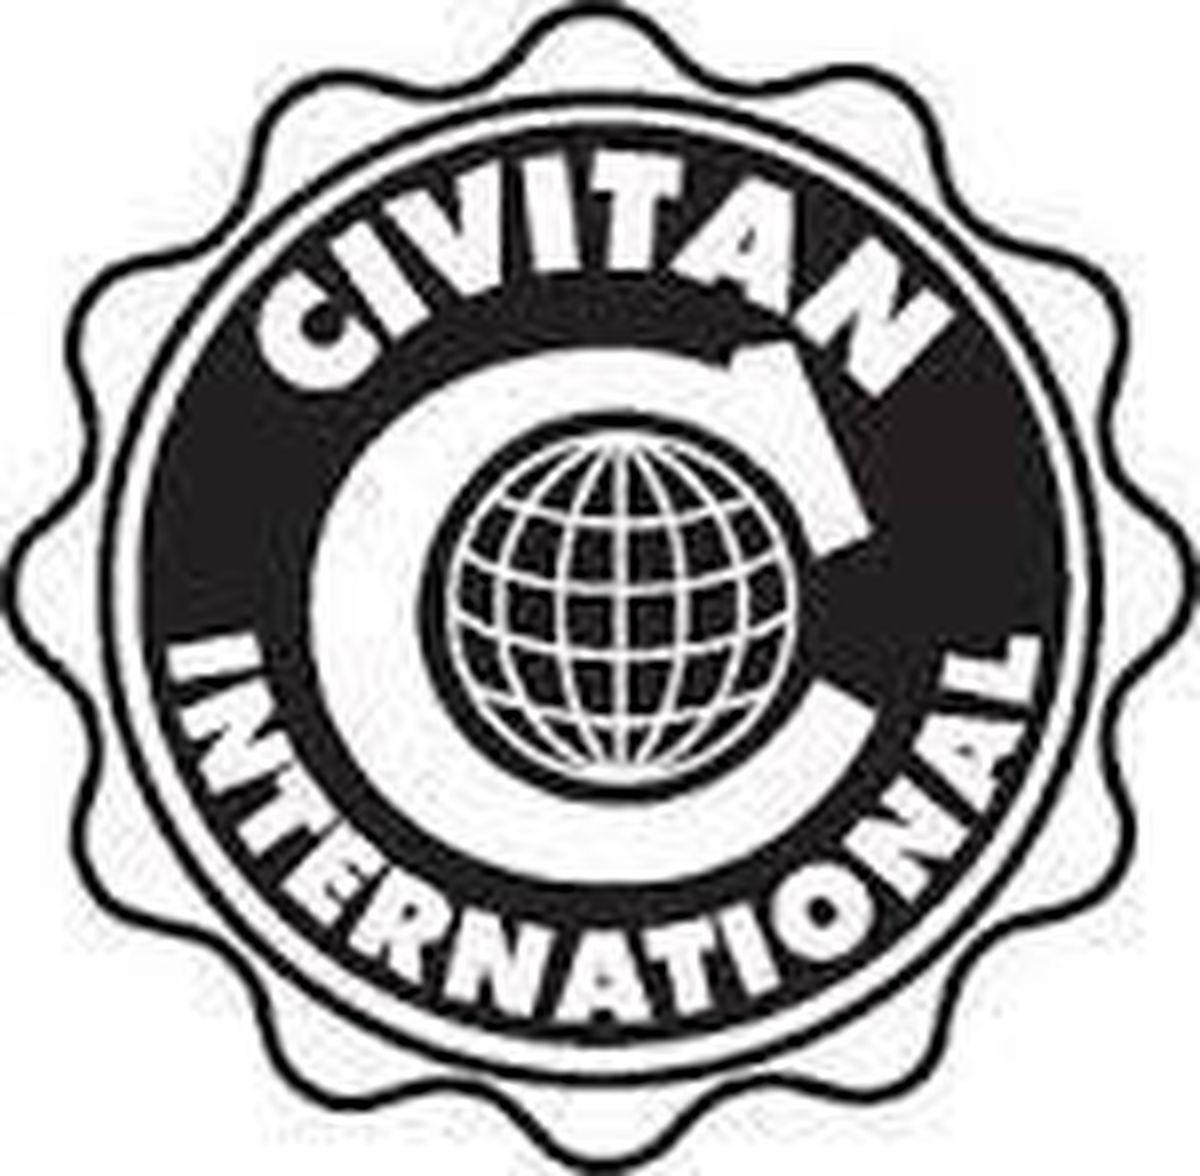 Civitan Logo - Civitan service club making its way to Carroll County Times